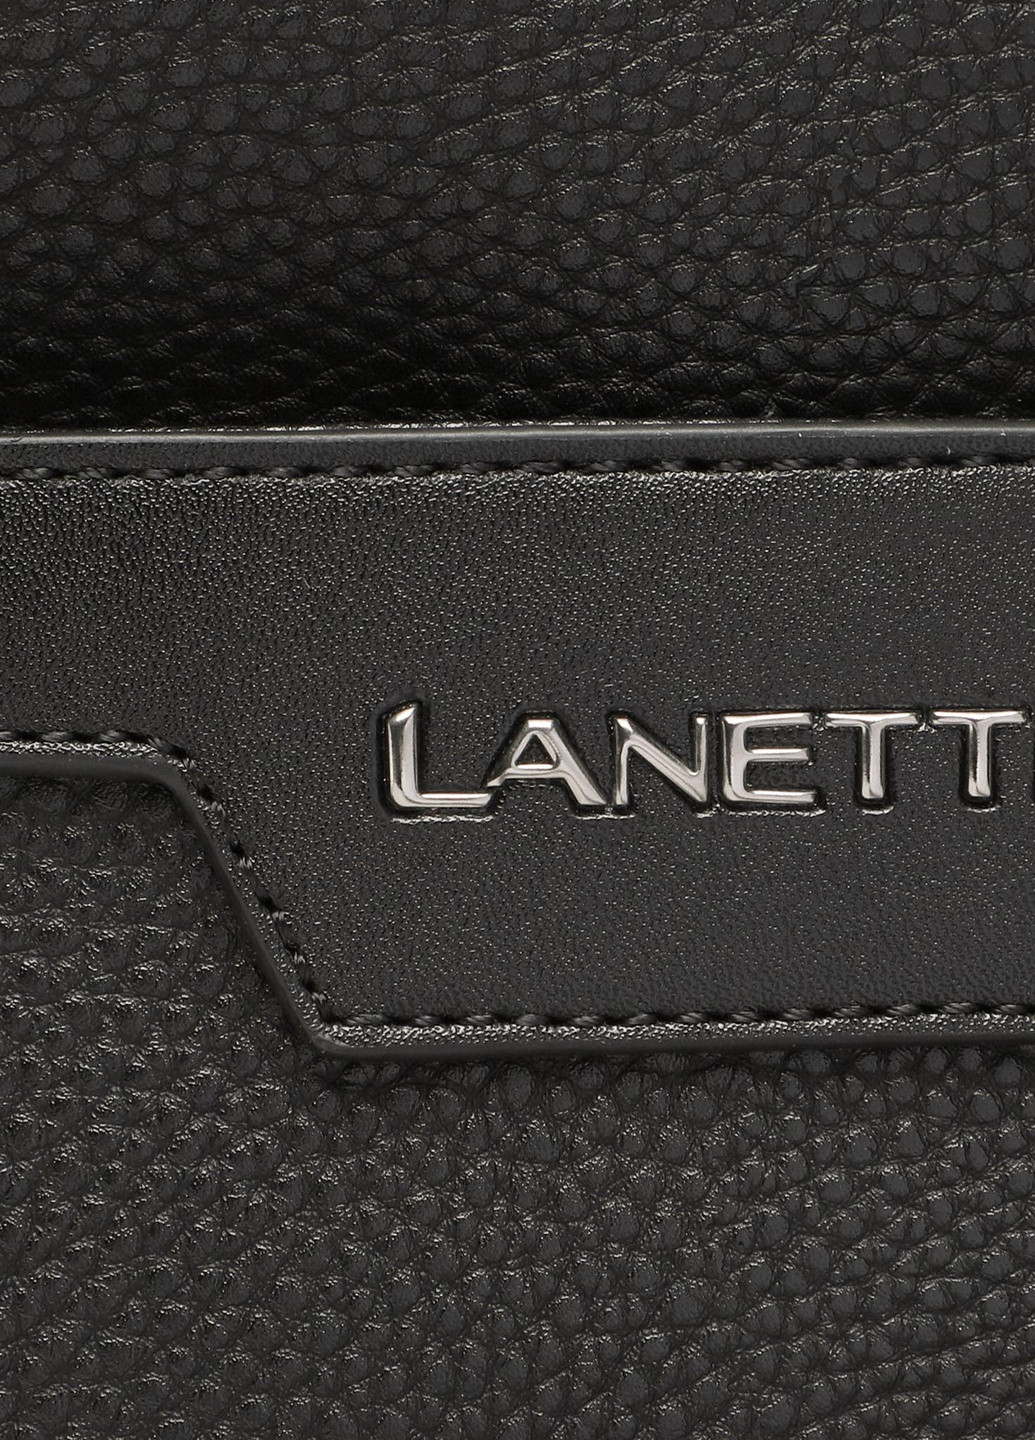 Плоска сумка BMR-U-033-10-09 Lanetti однотонная чёрная